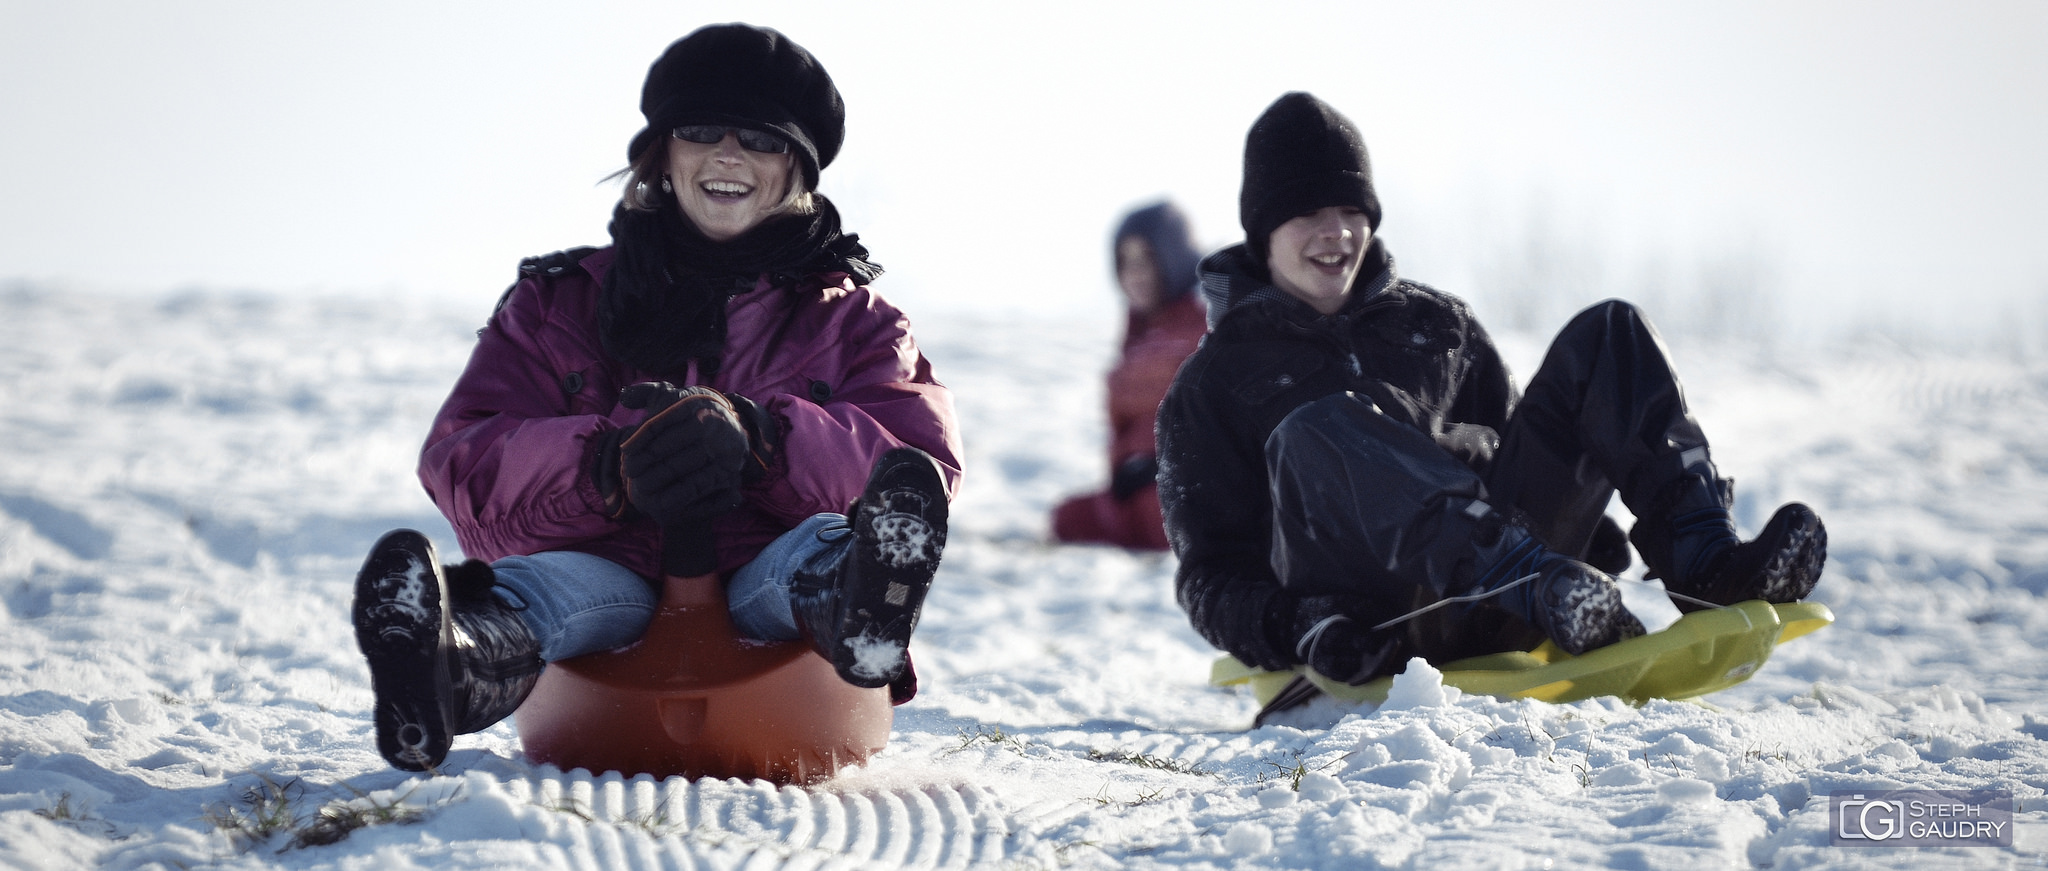 Snow sled races [Click to start slideshow]